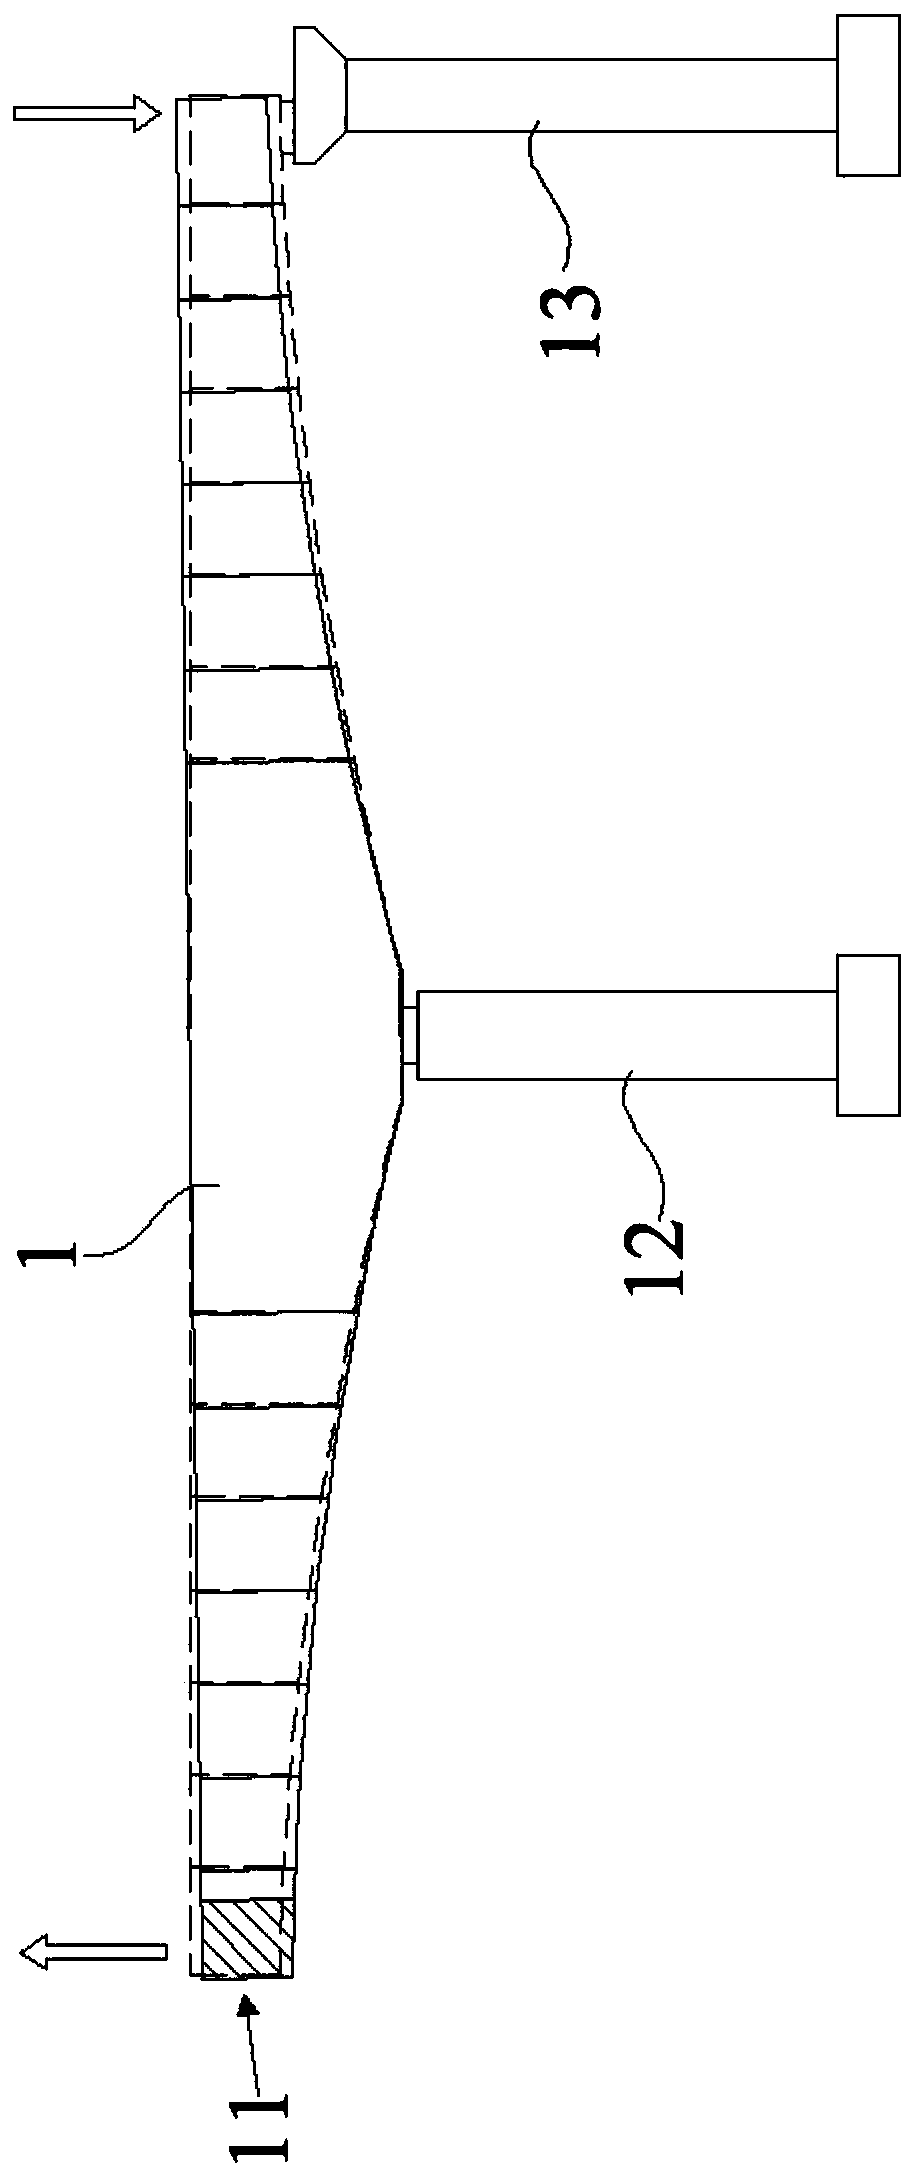 Method for adjusting bridge deck elevation and height limiting device